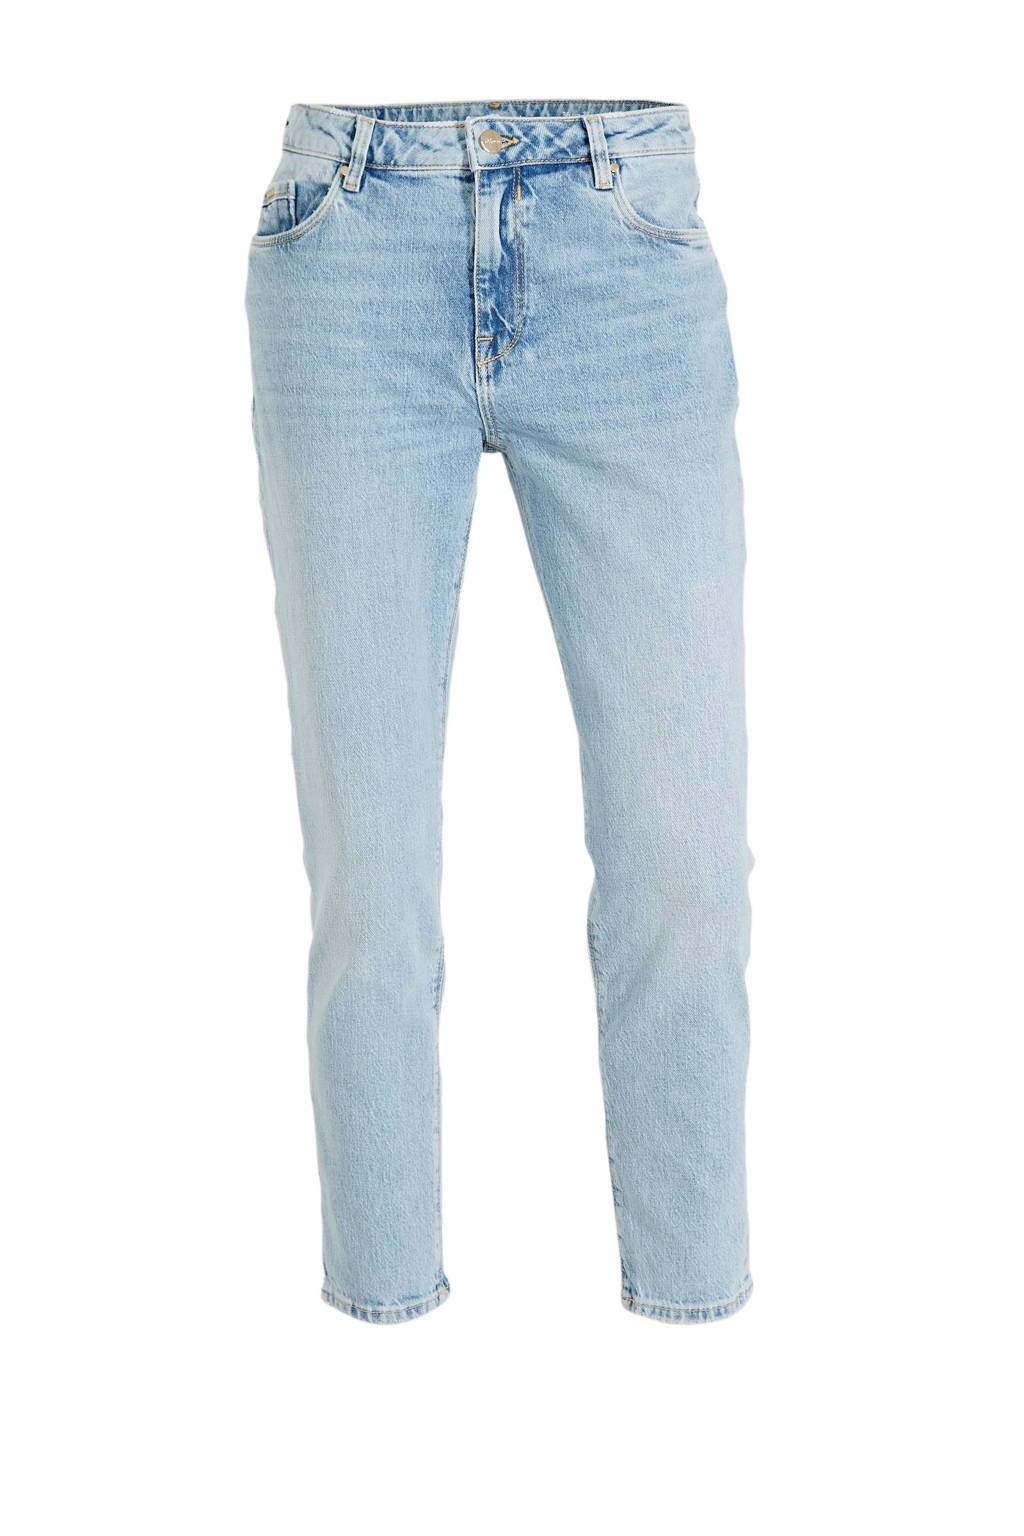 C&A The Denim straight fit jeans light denim stonewashed